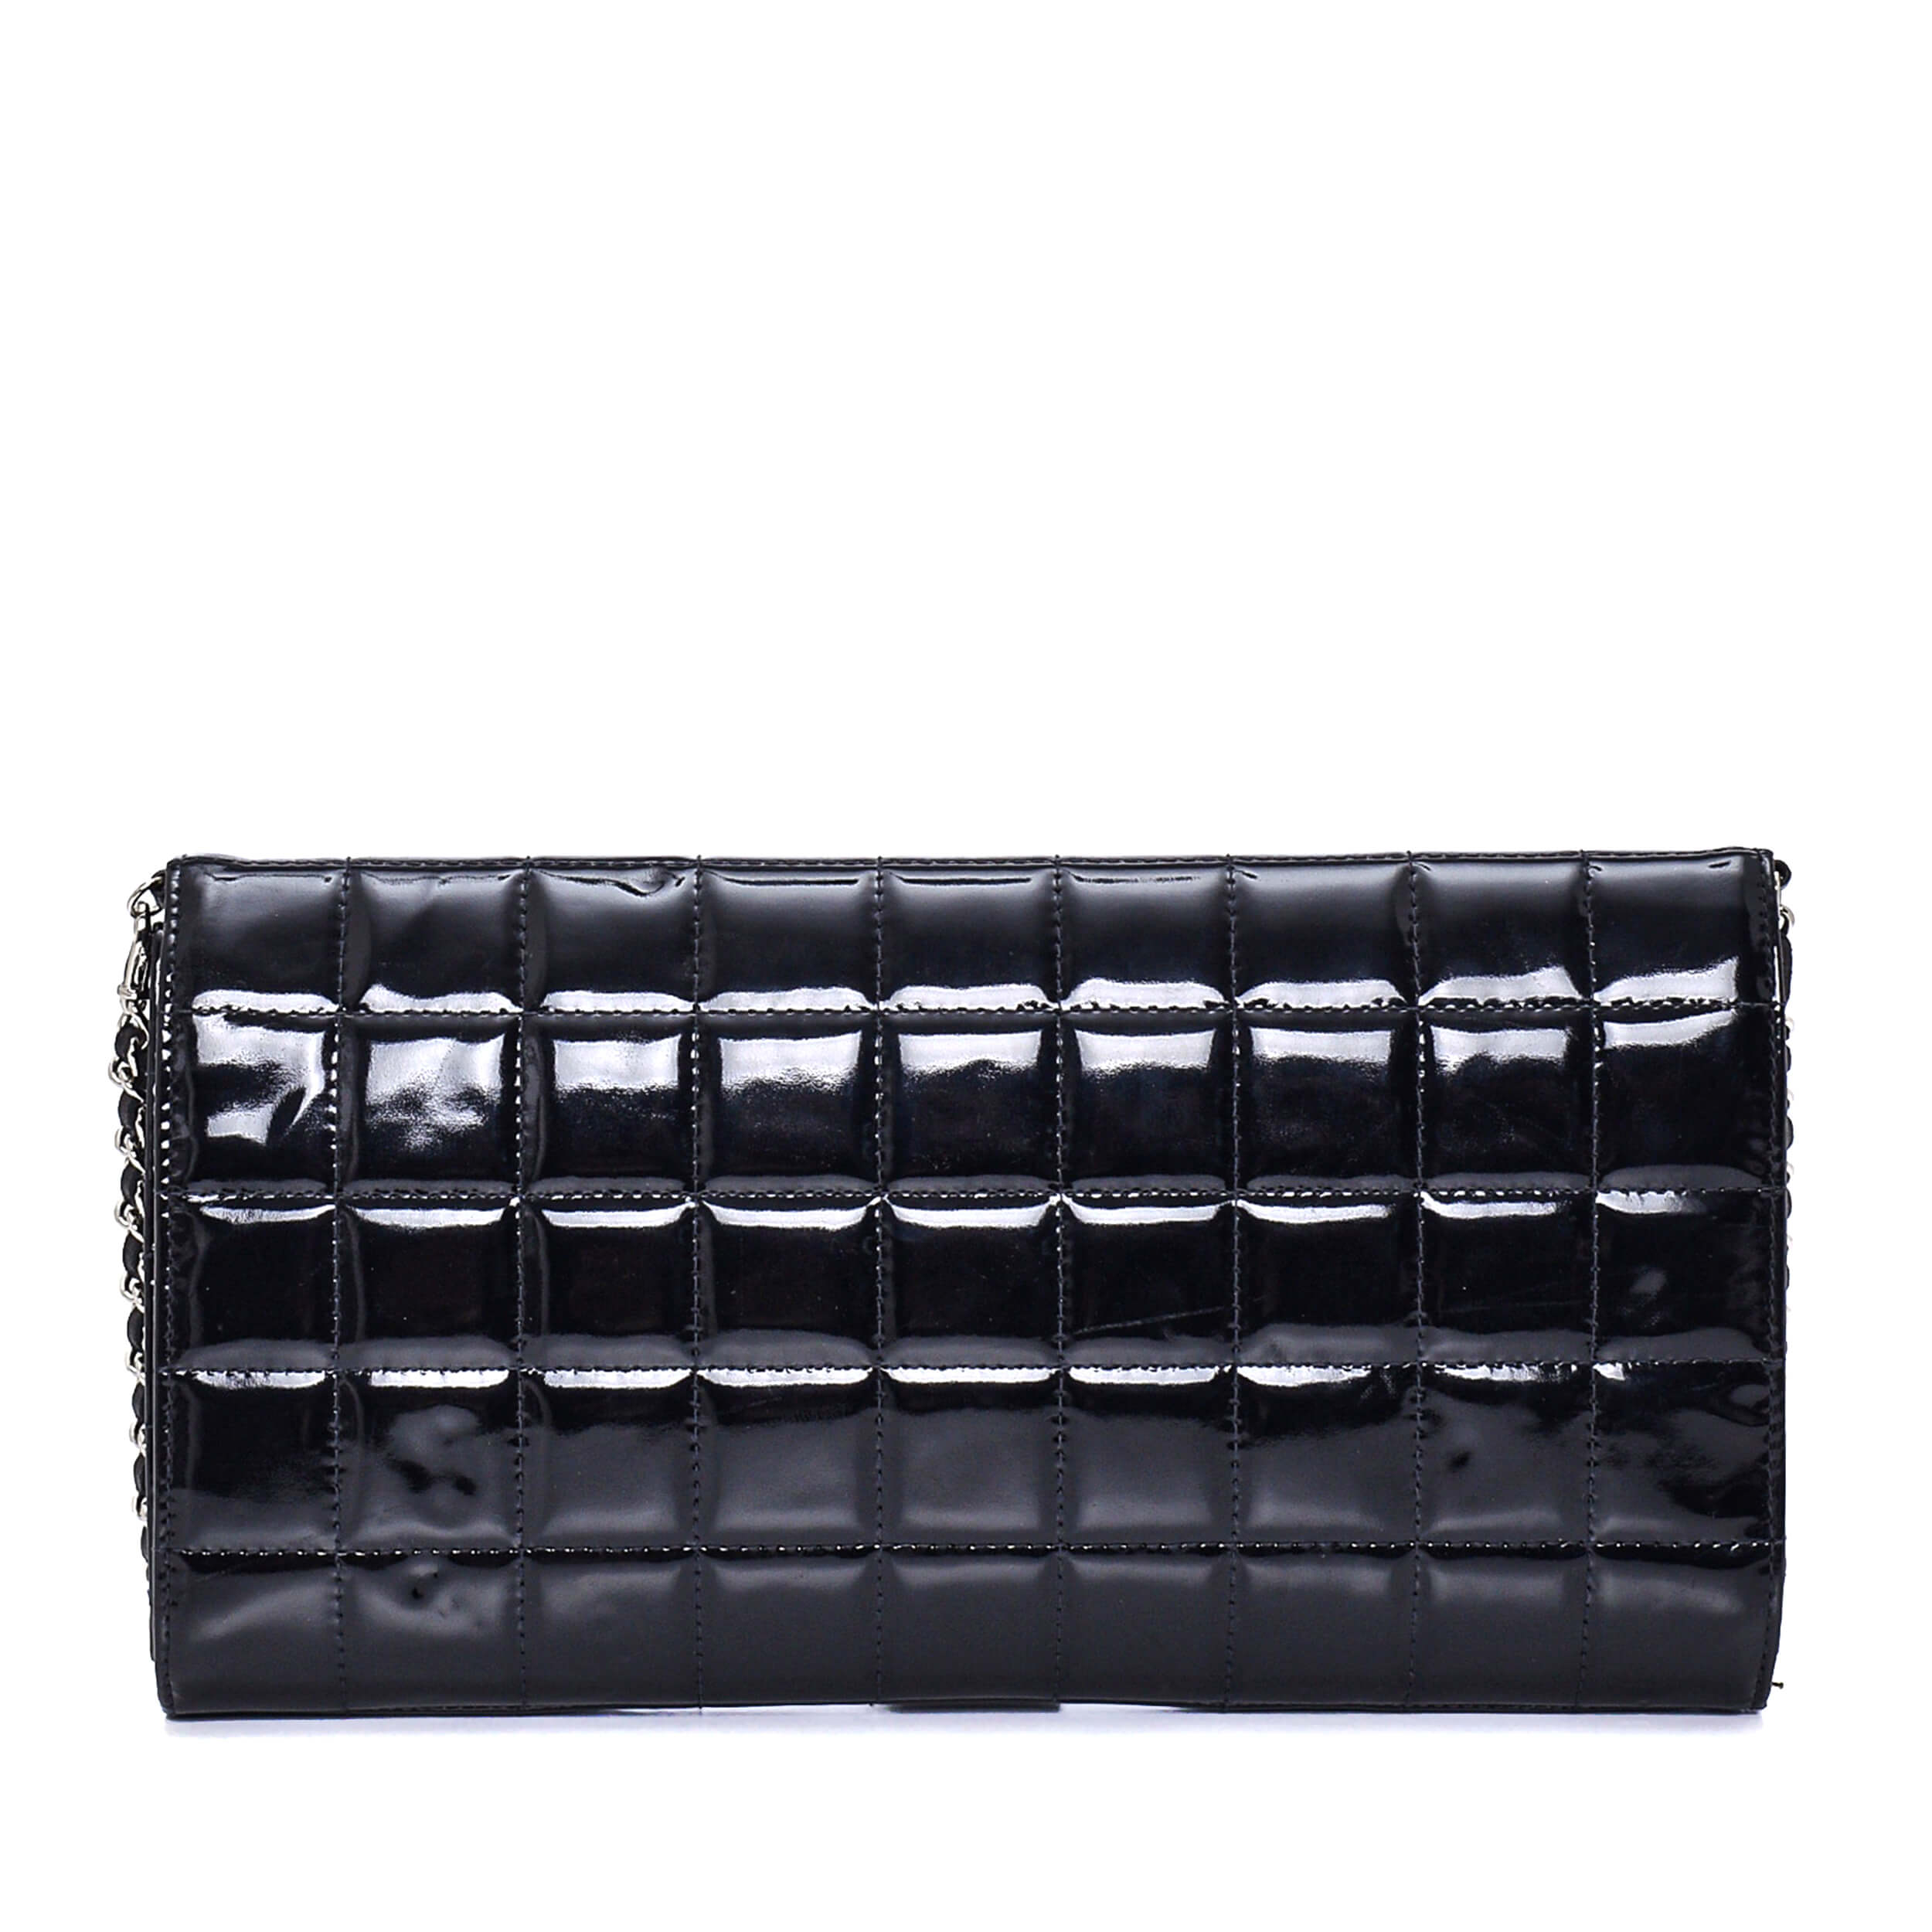 Chanel - Black Checked Patent Leather CC Plaka Shoulder Bag & Clutch